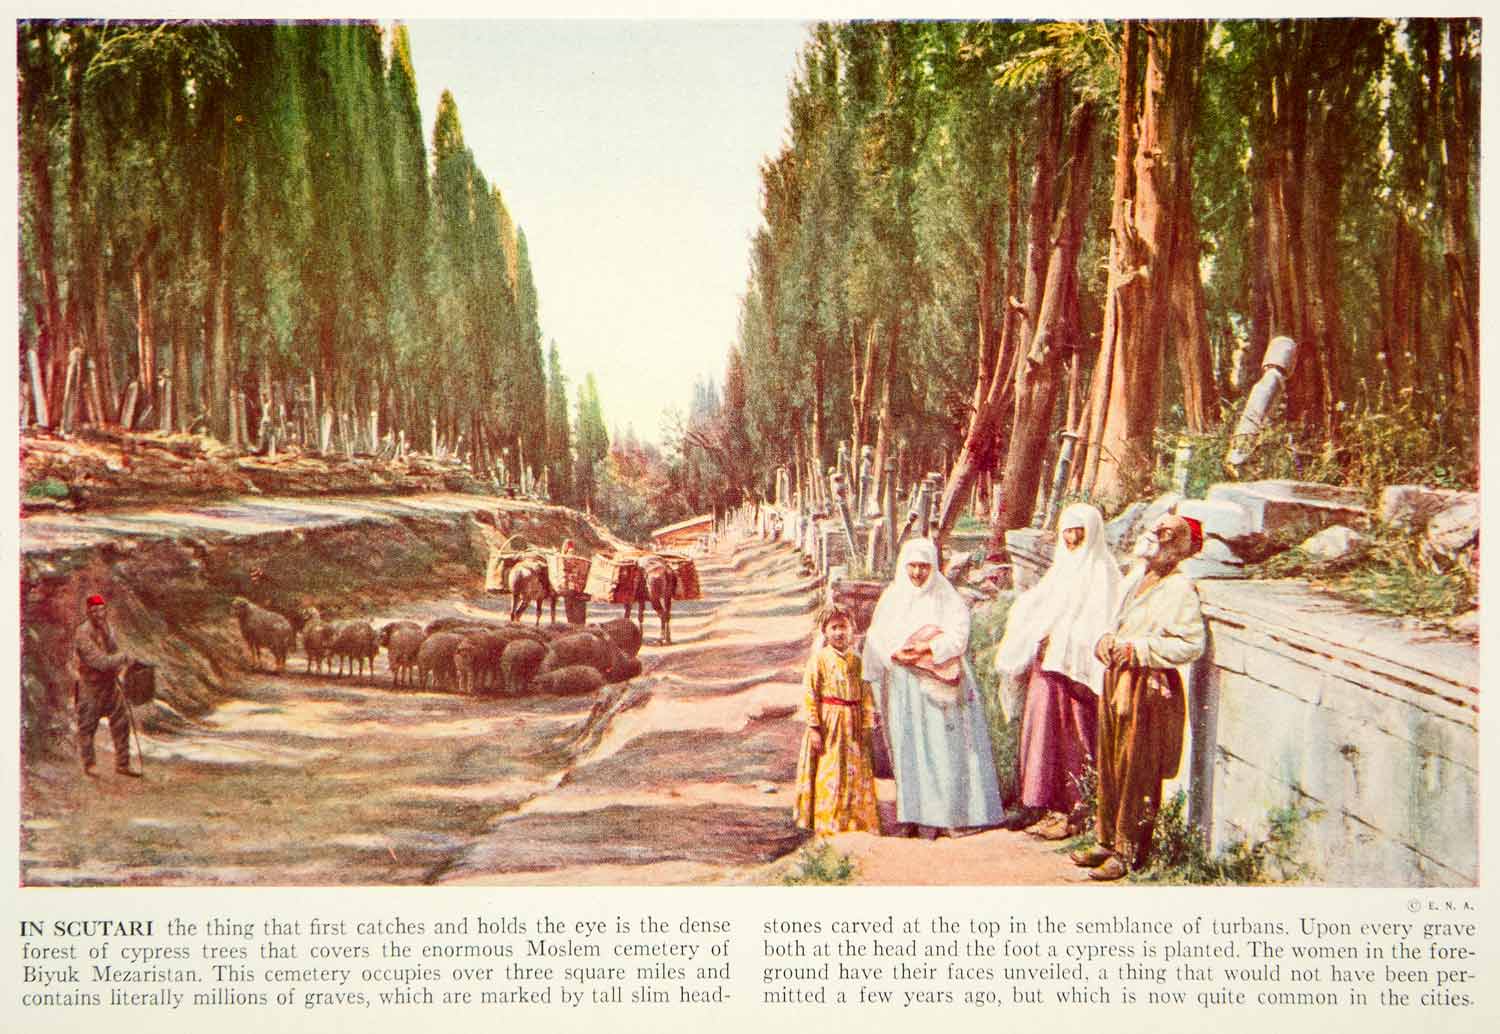 1938 Color Print Biyuk Mezaristan Cemetery Scutari District Constantinople XGGD4